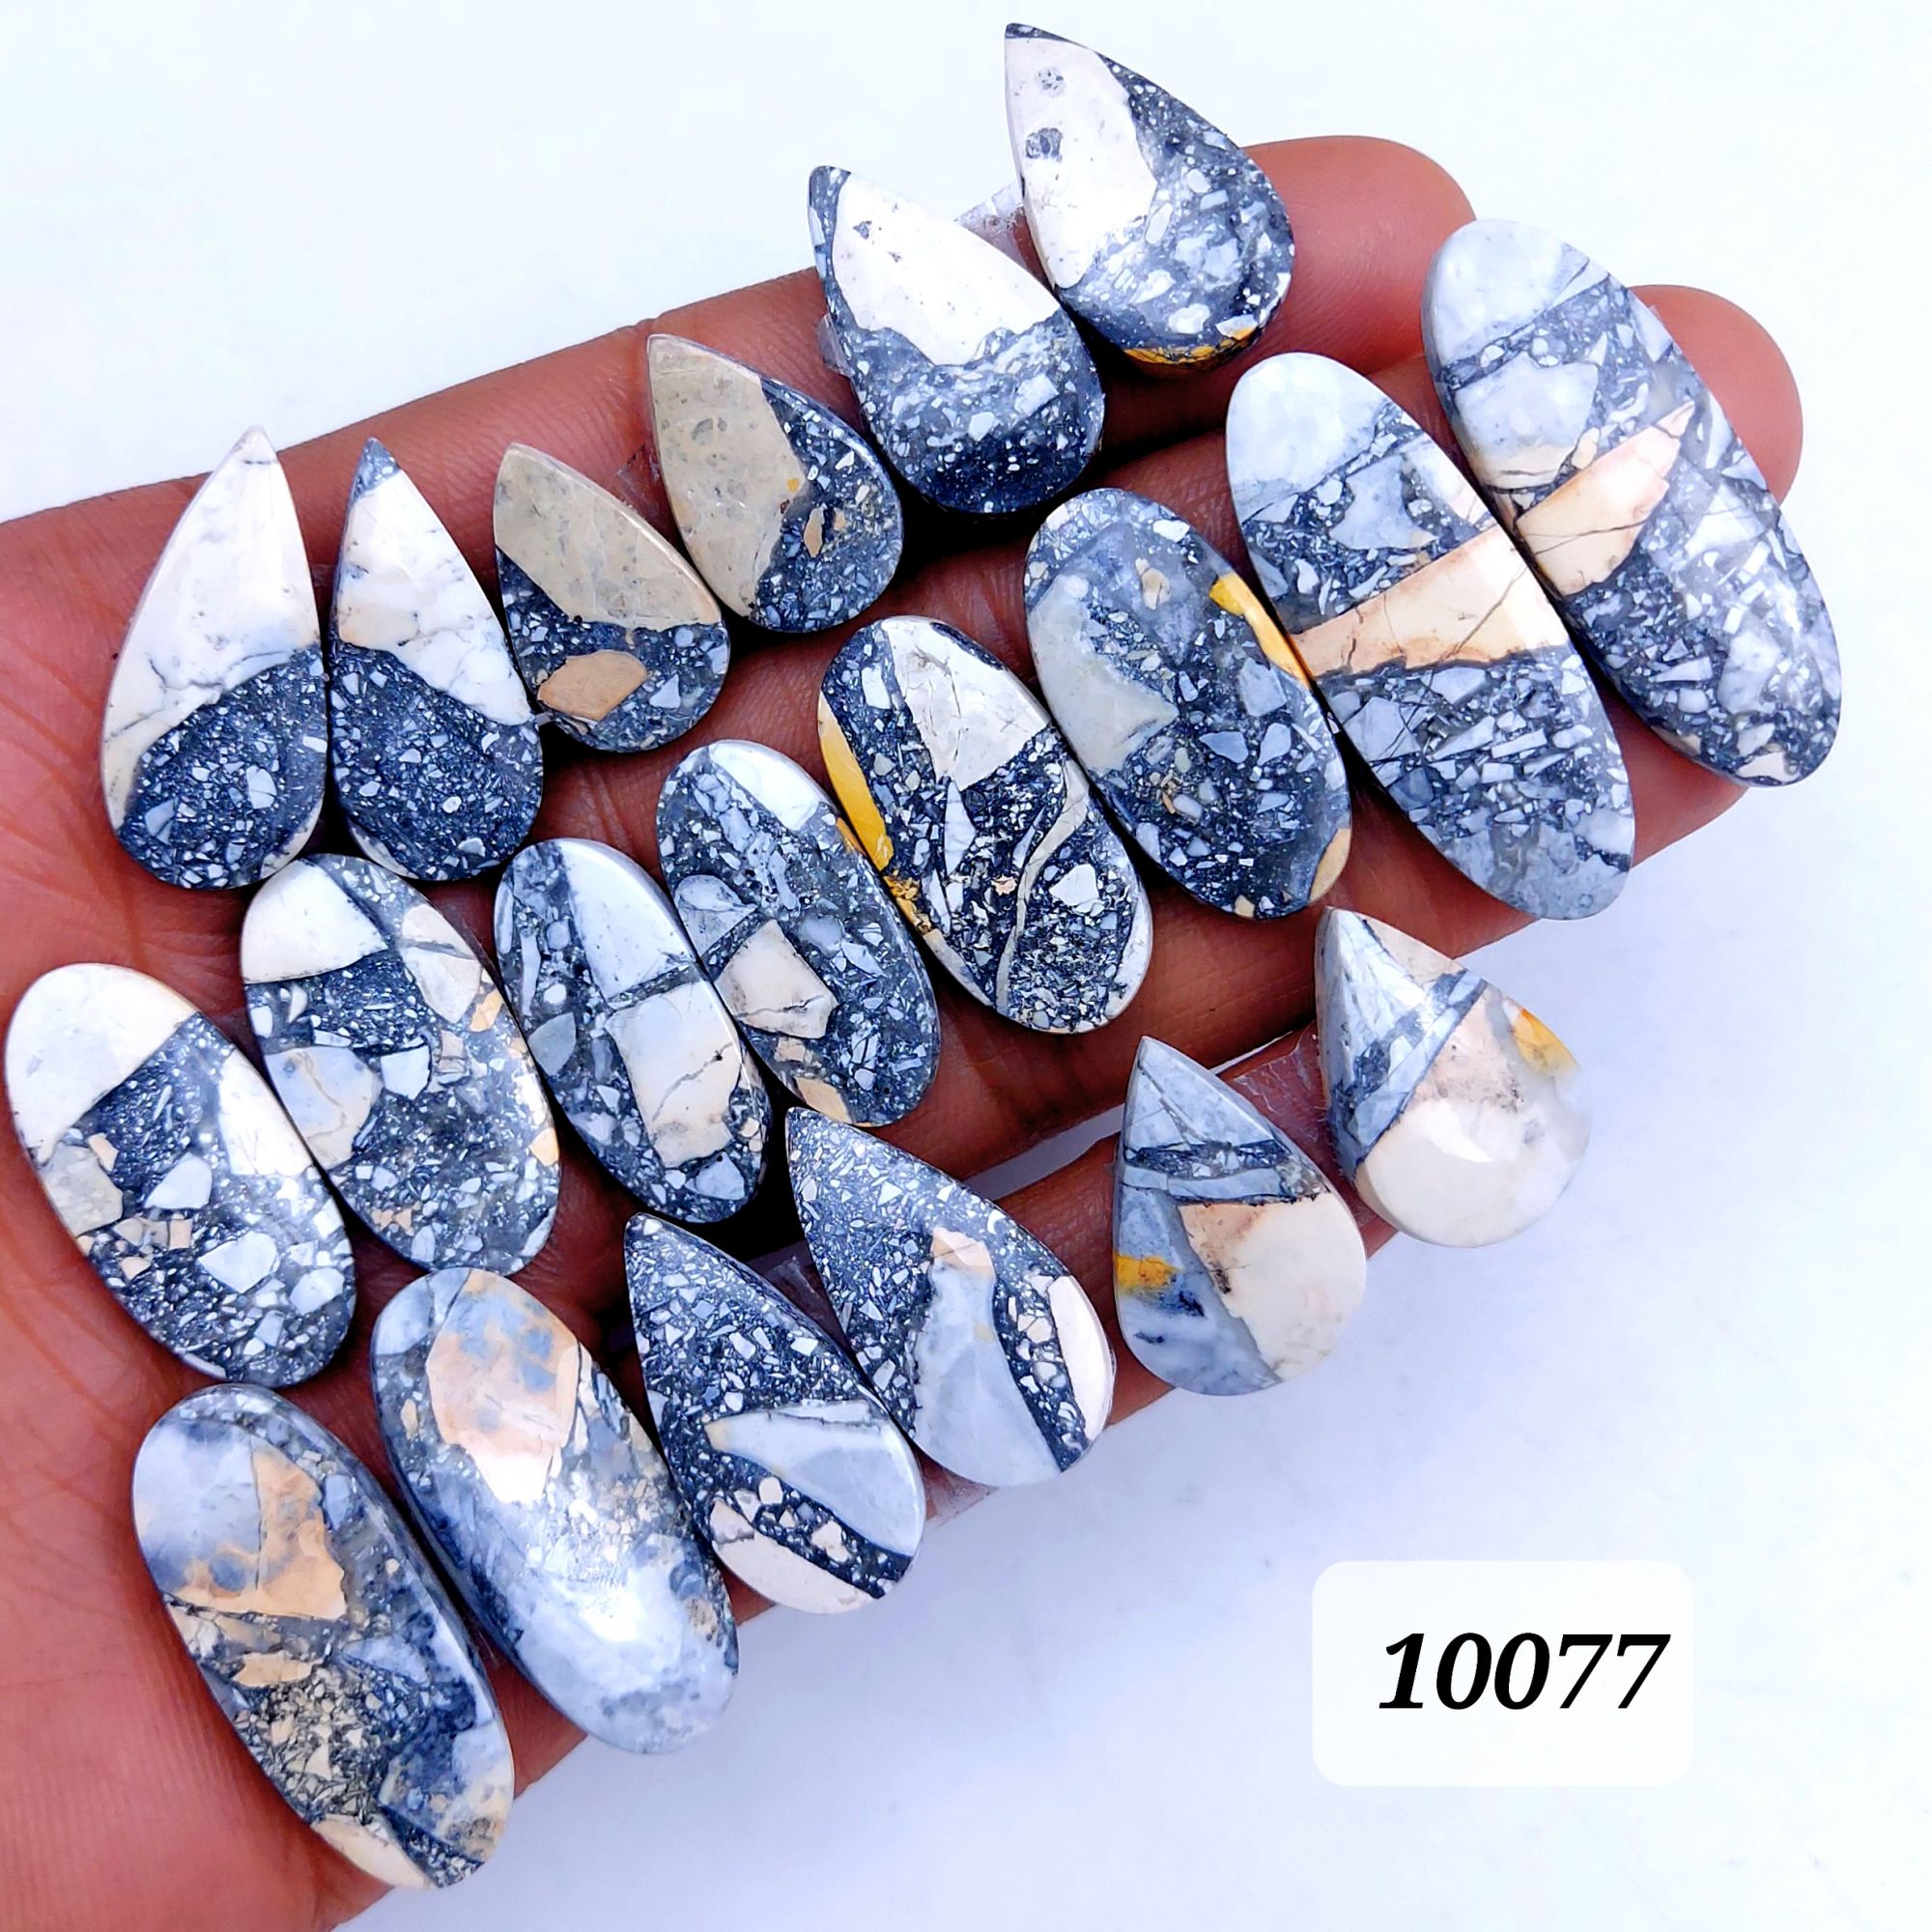 10Pcs 321Cts Natural Maligano Jasper Cabochon Pair Lot Back Side Unpolished Semi-Precious Gemstones For Jewelry Making 36x13 22x12mm #10077